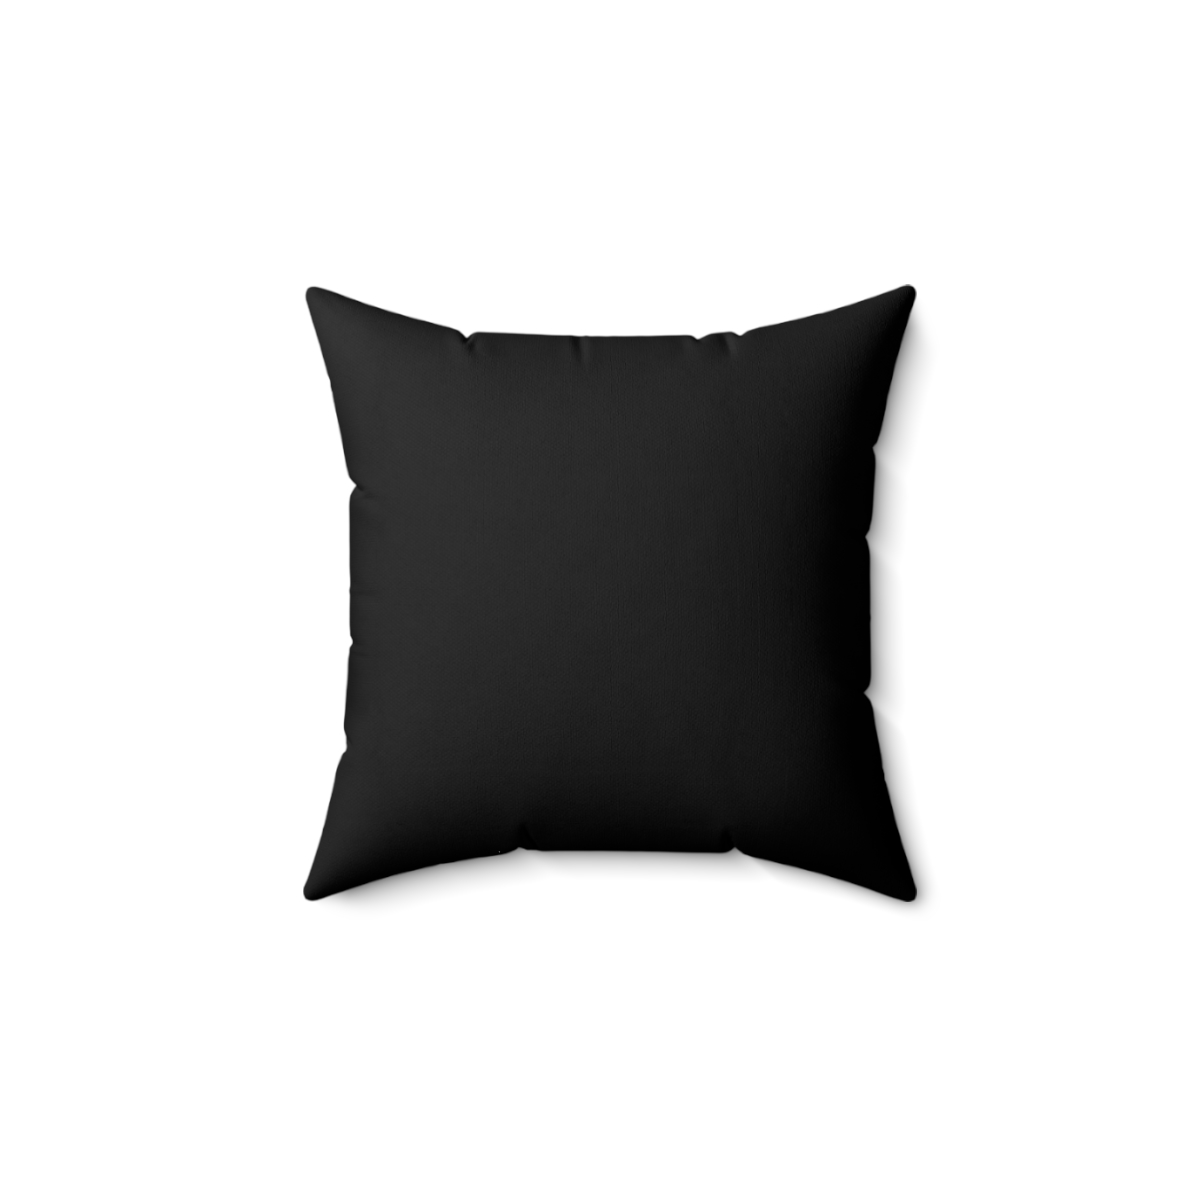 Spun Polyester Square Pillow product thumbnail image